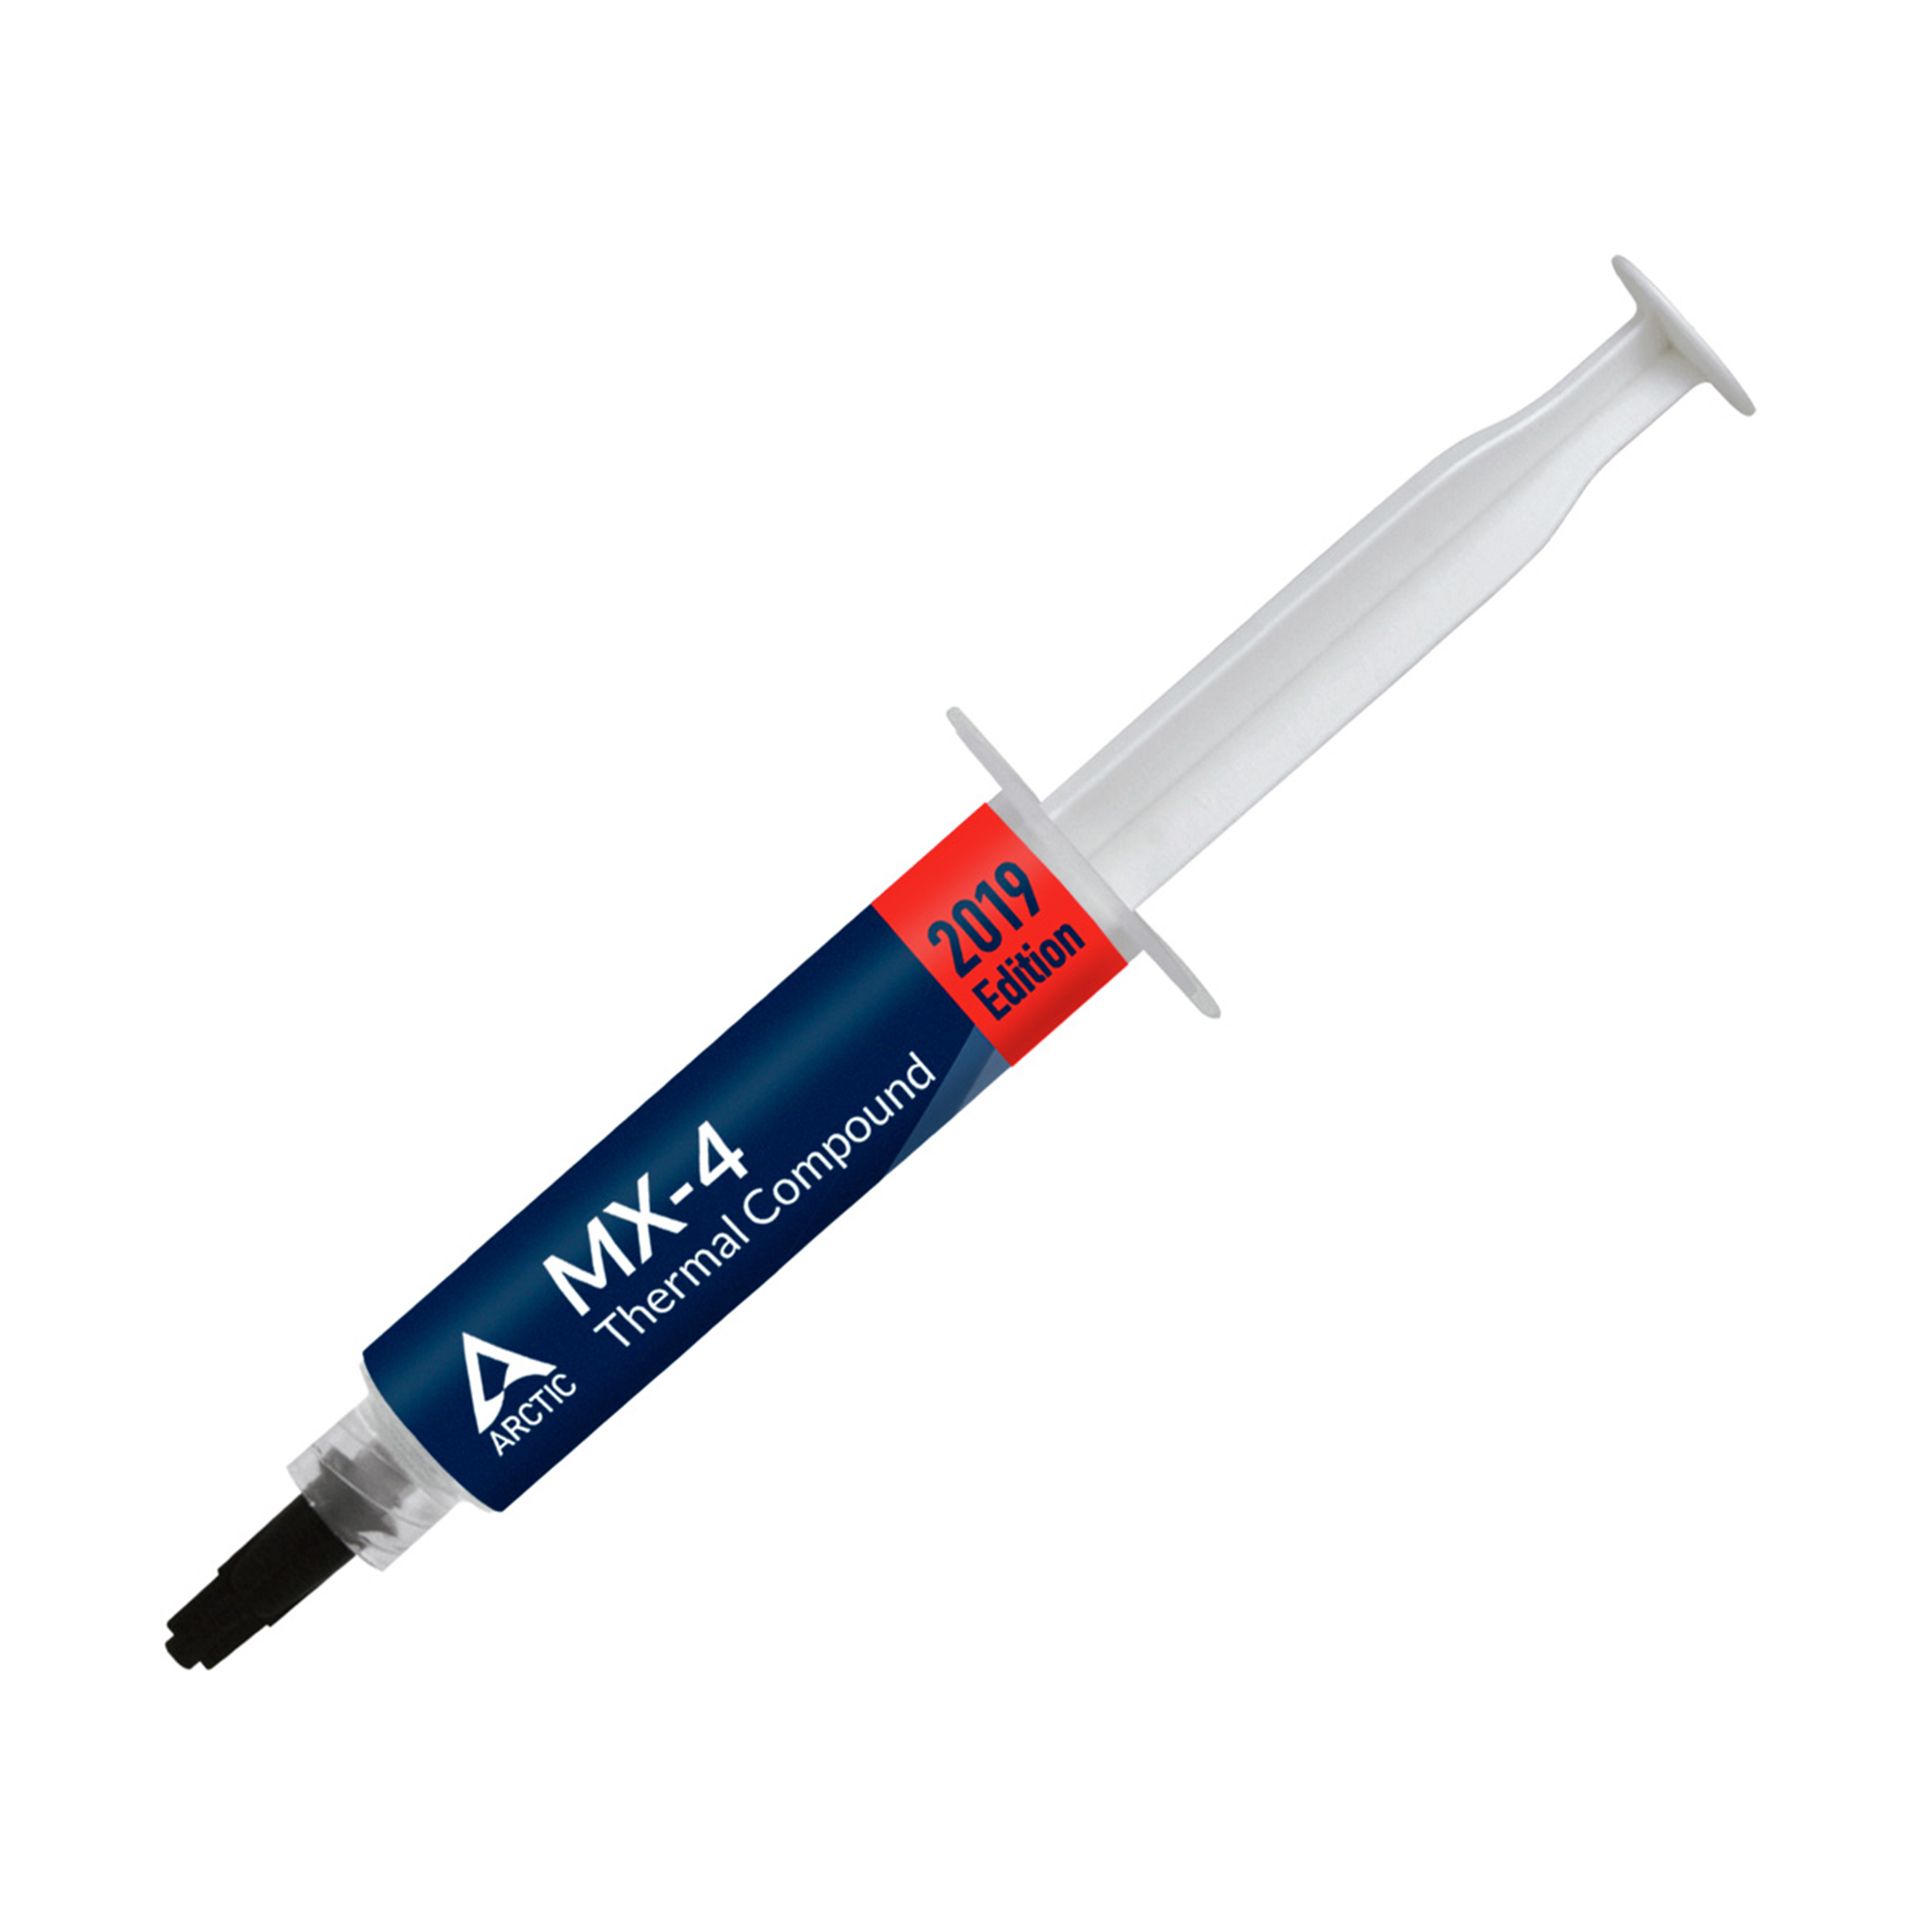 ARCTIC MX-4 (20 g) Edition 2019 - High Performance Thermal Paste termopasta